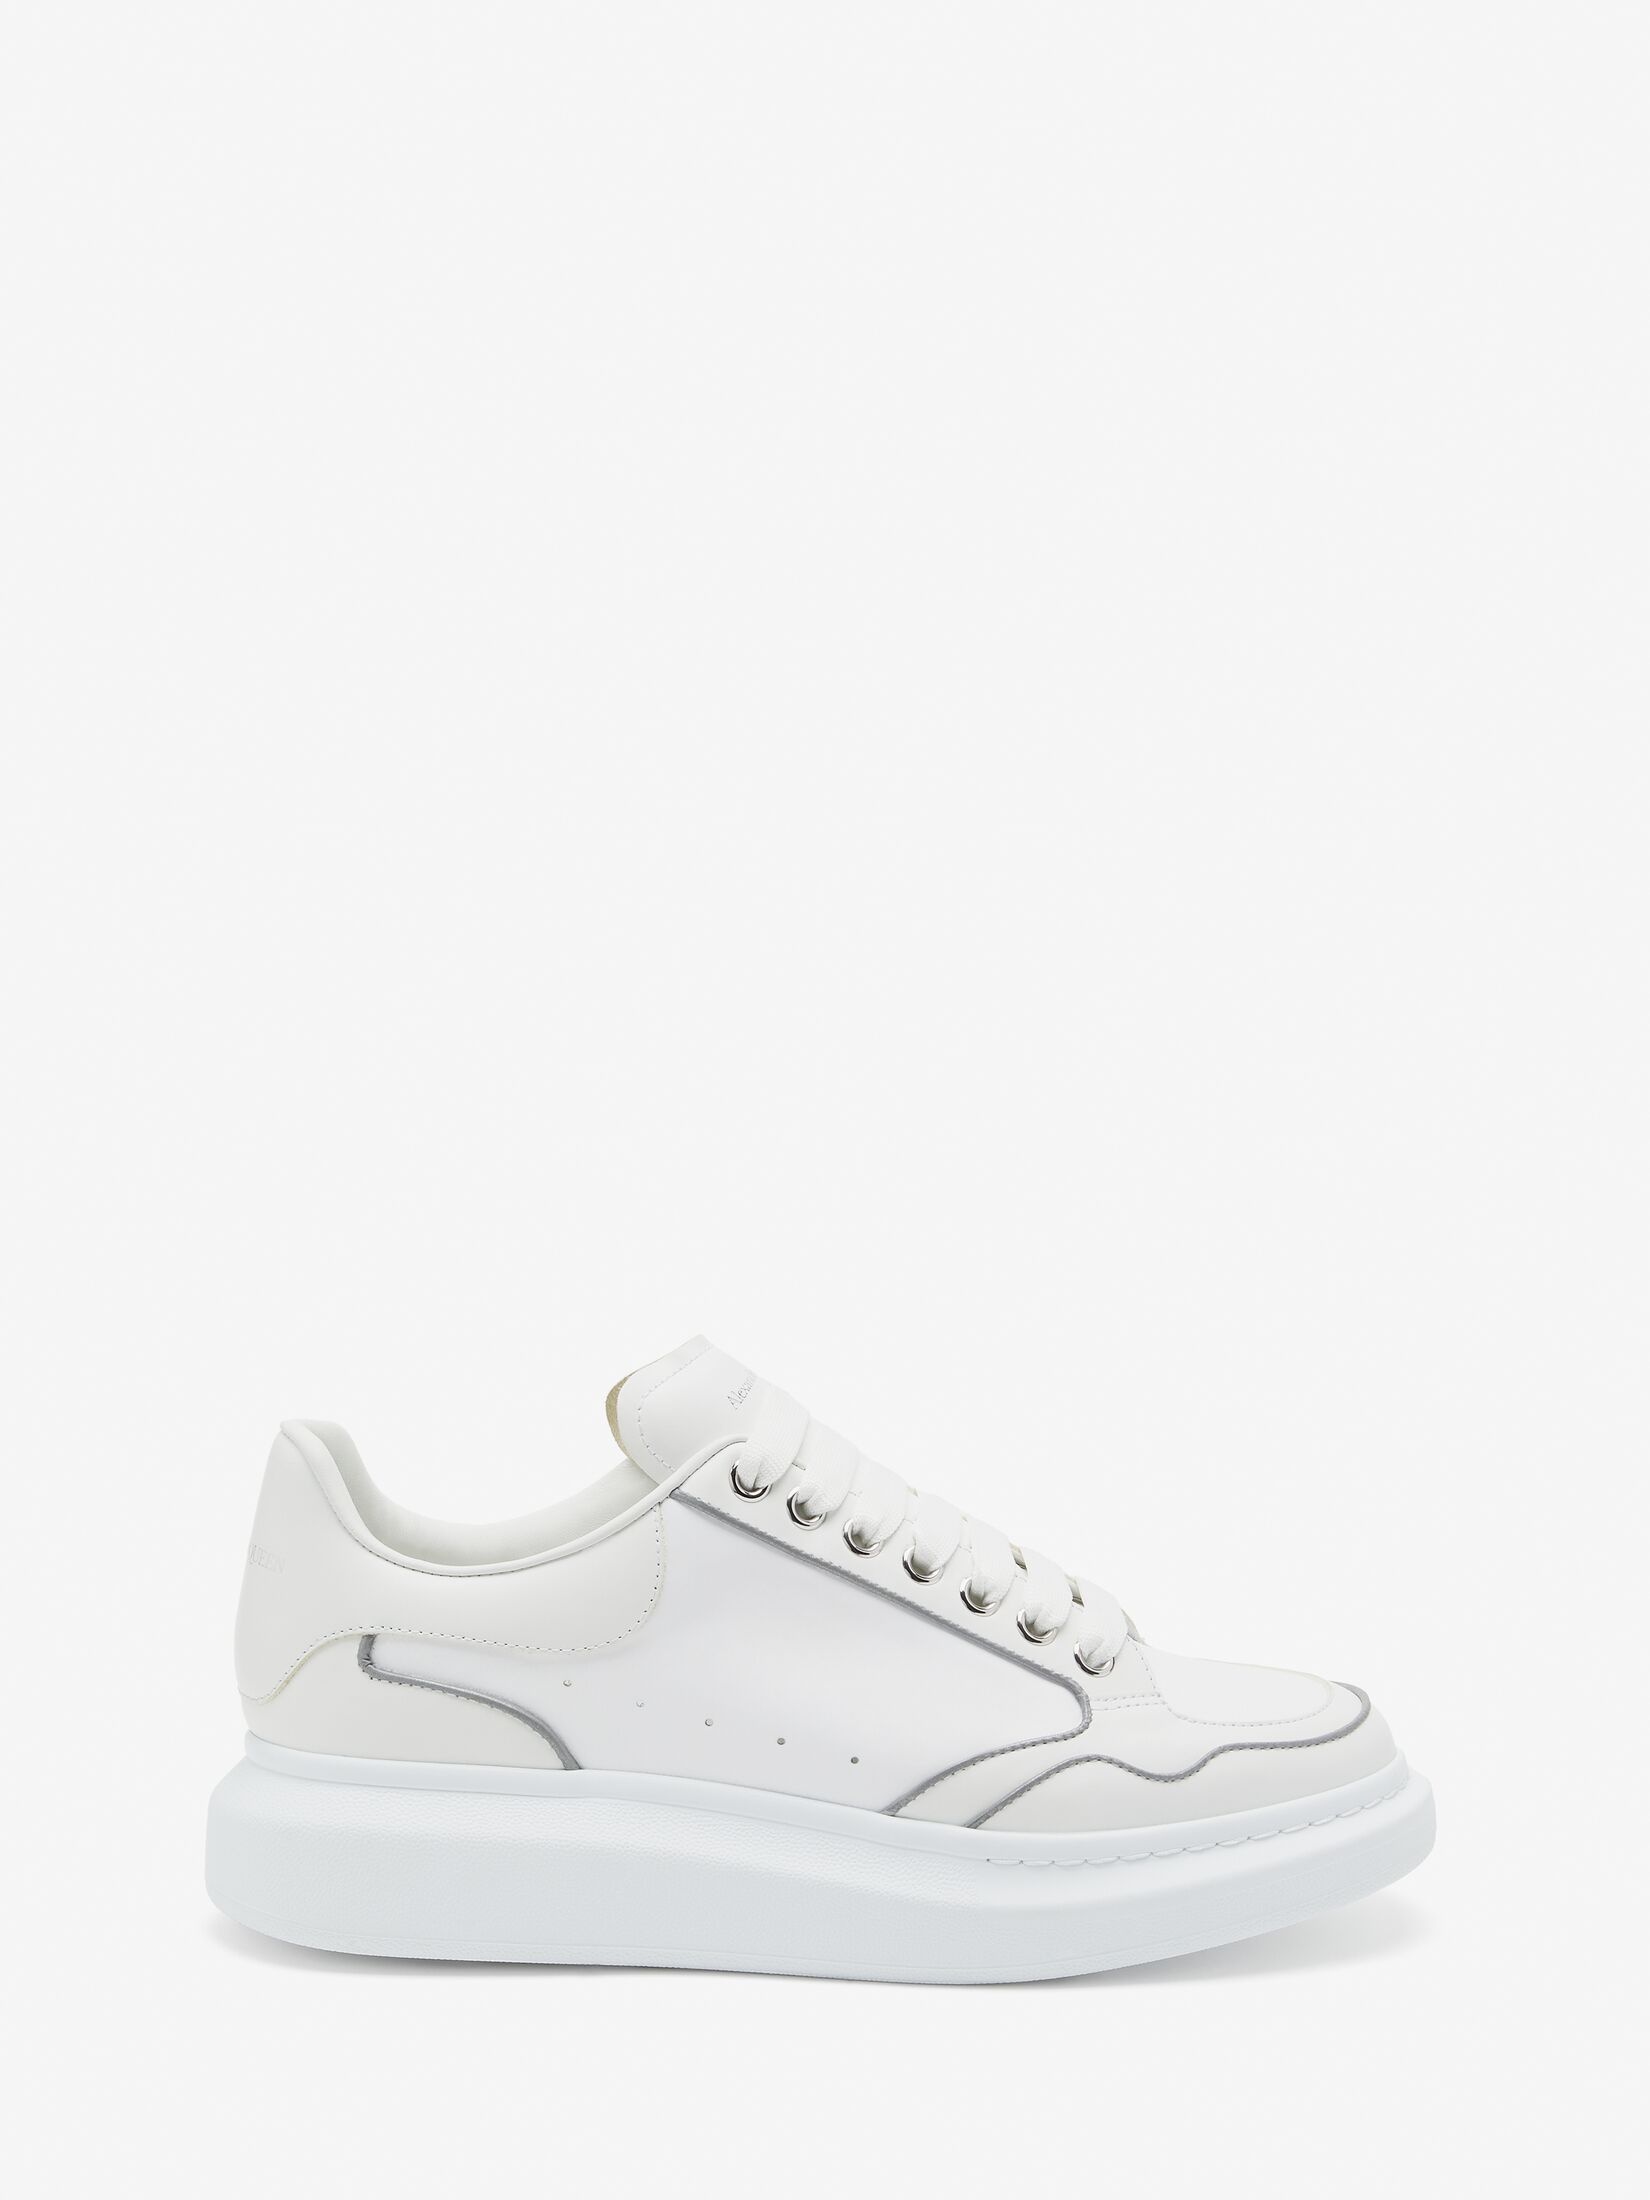 Men's Oversized Sneaker in White/silver - 1